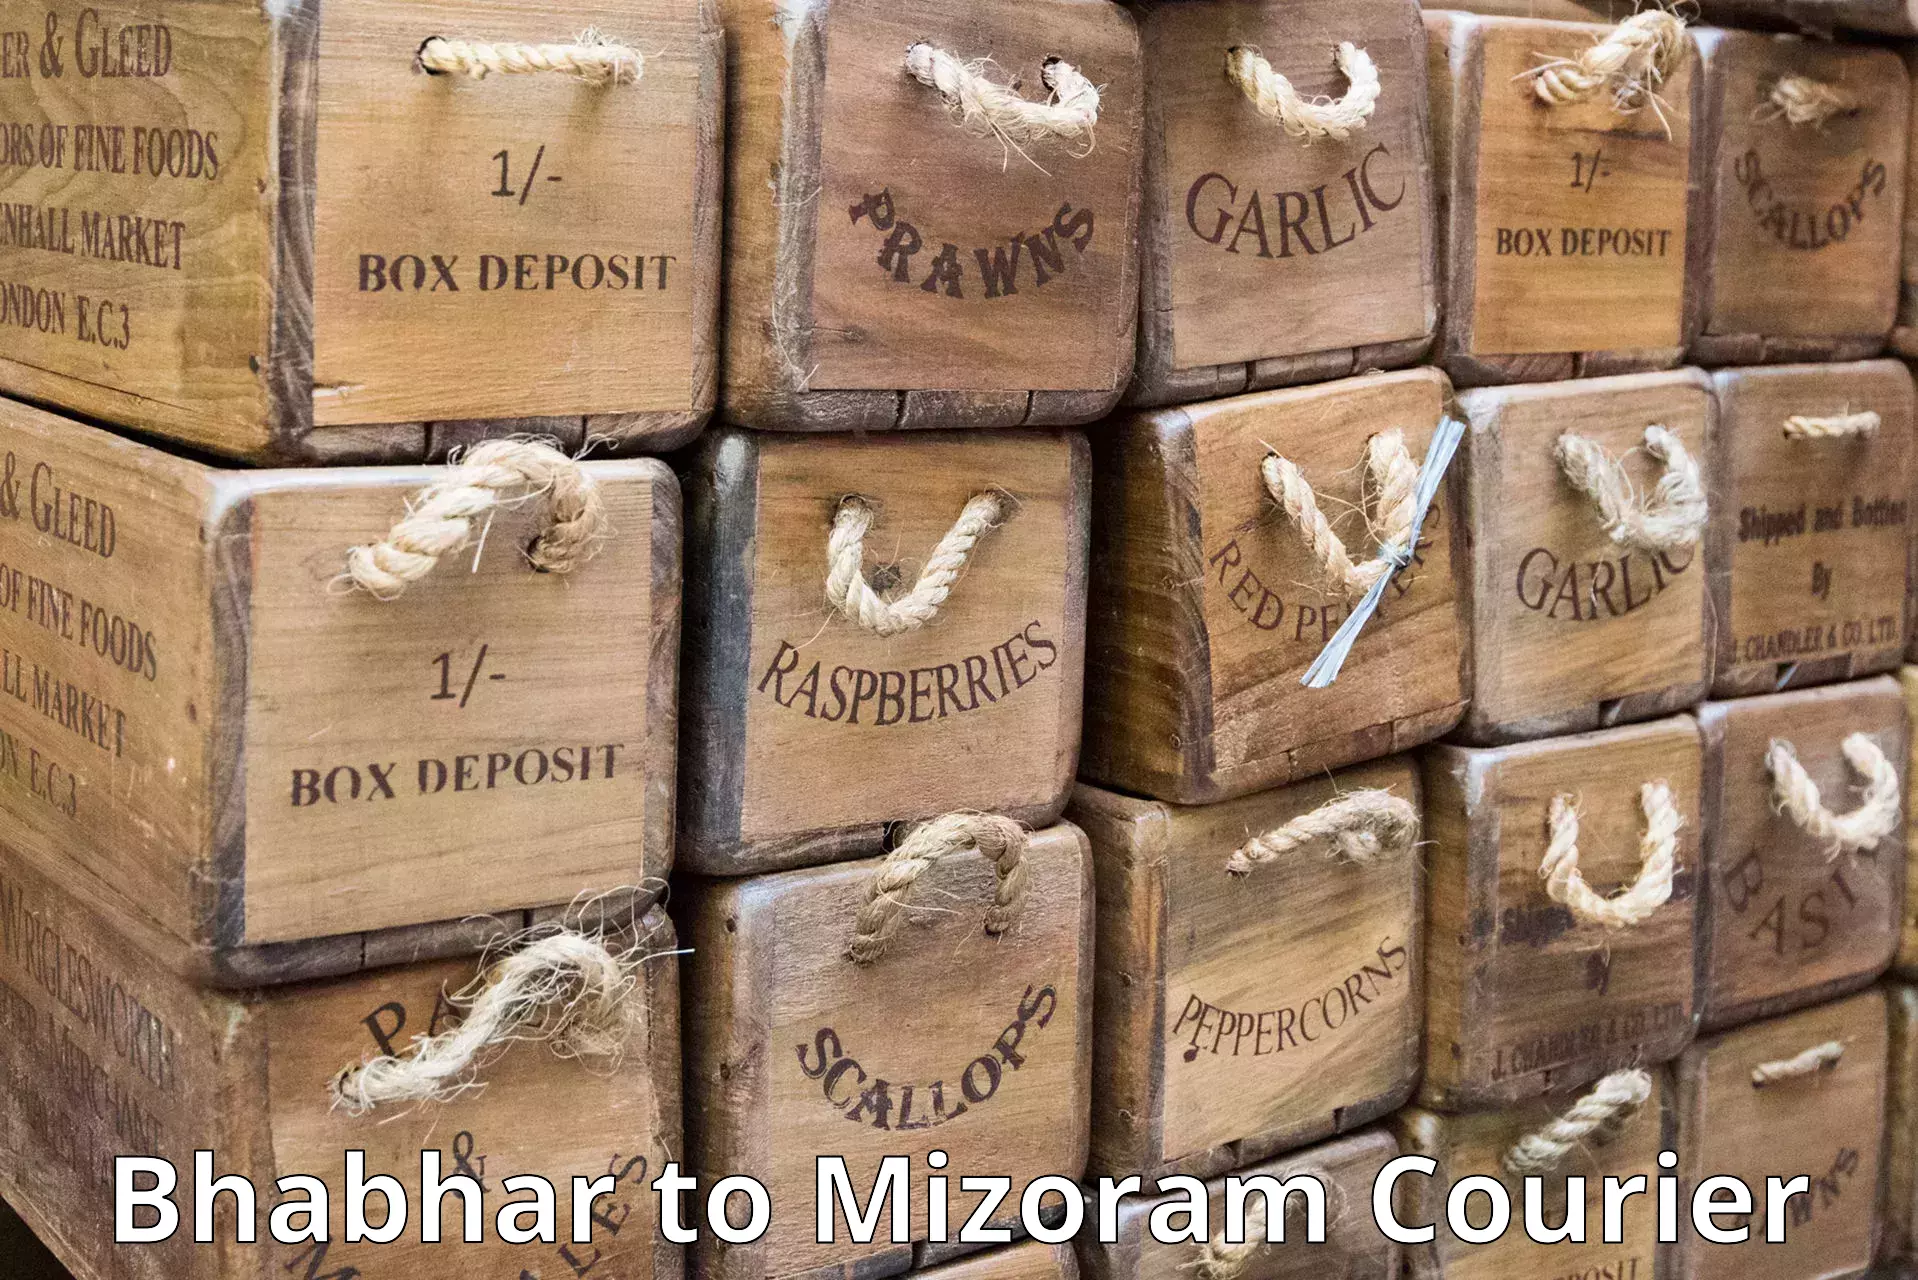 Courier service comparison Bhabhar to Mizoram